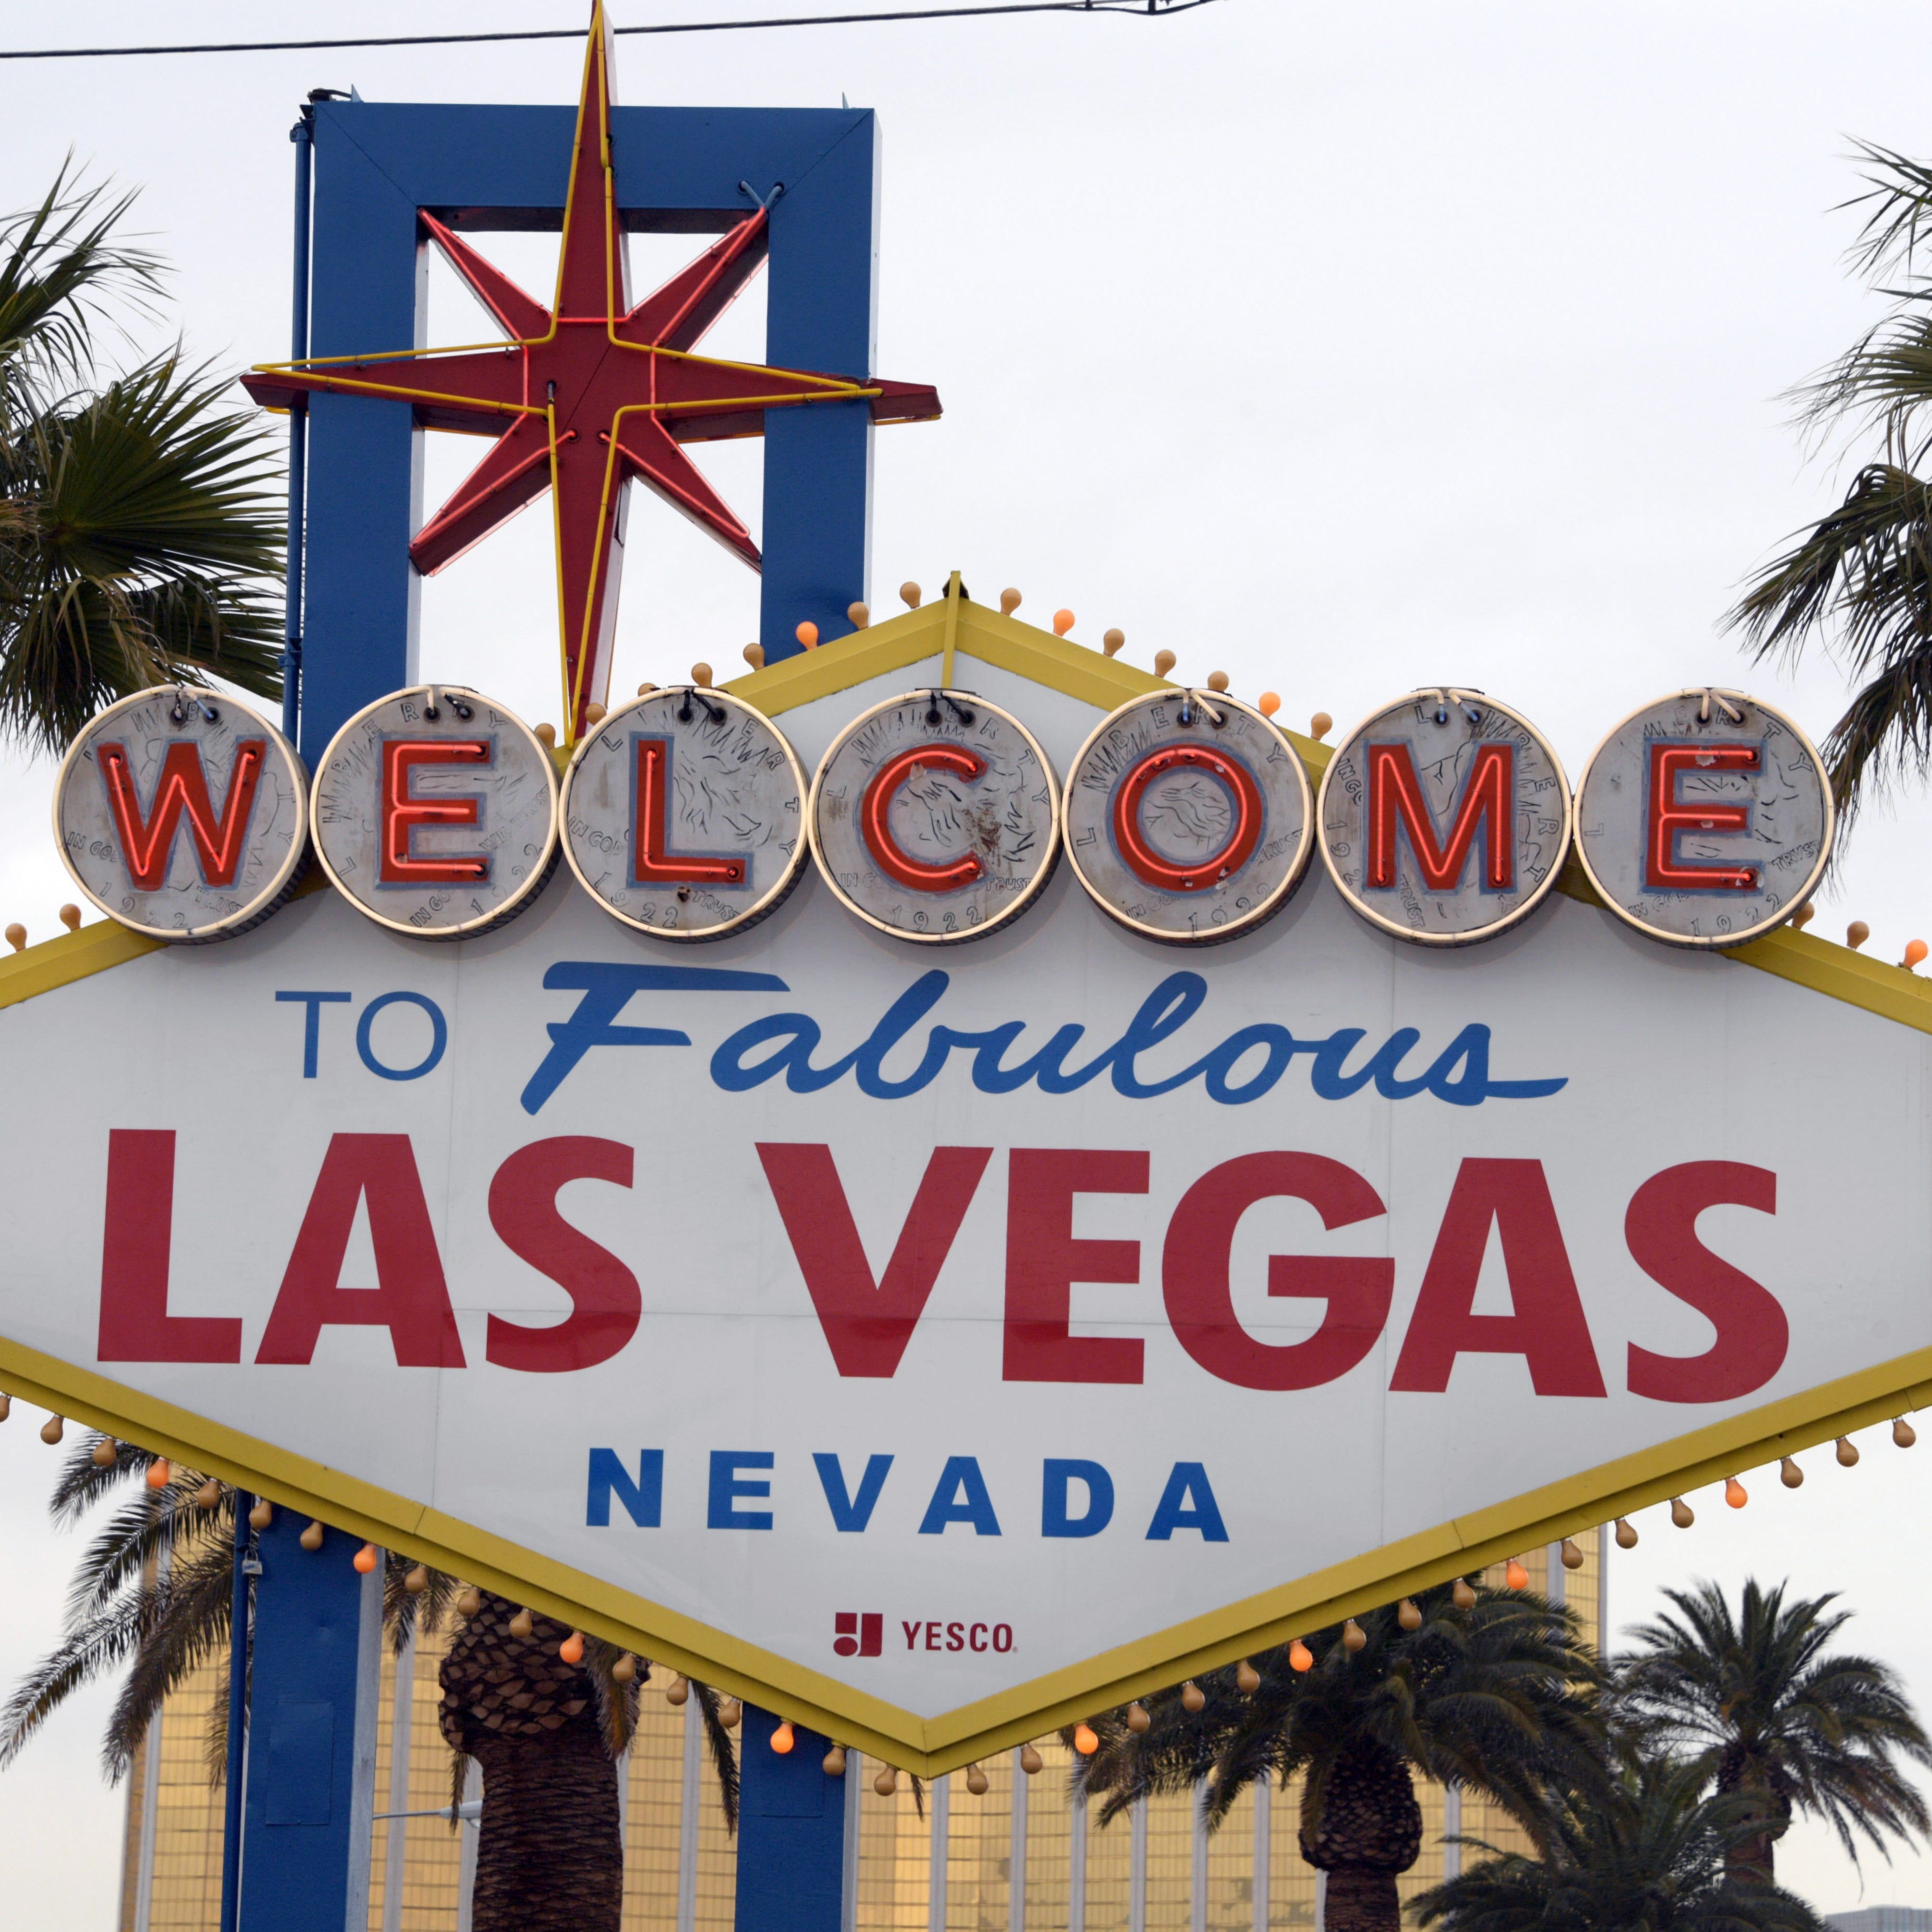 View of the Welcome to Fabulous Las Vegas sign on Las Vegas Blvd. on the Las Vegas strip.